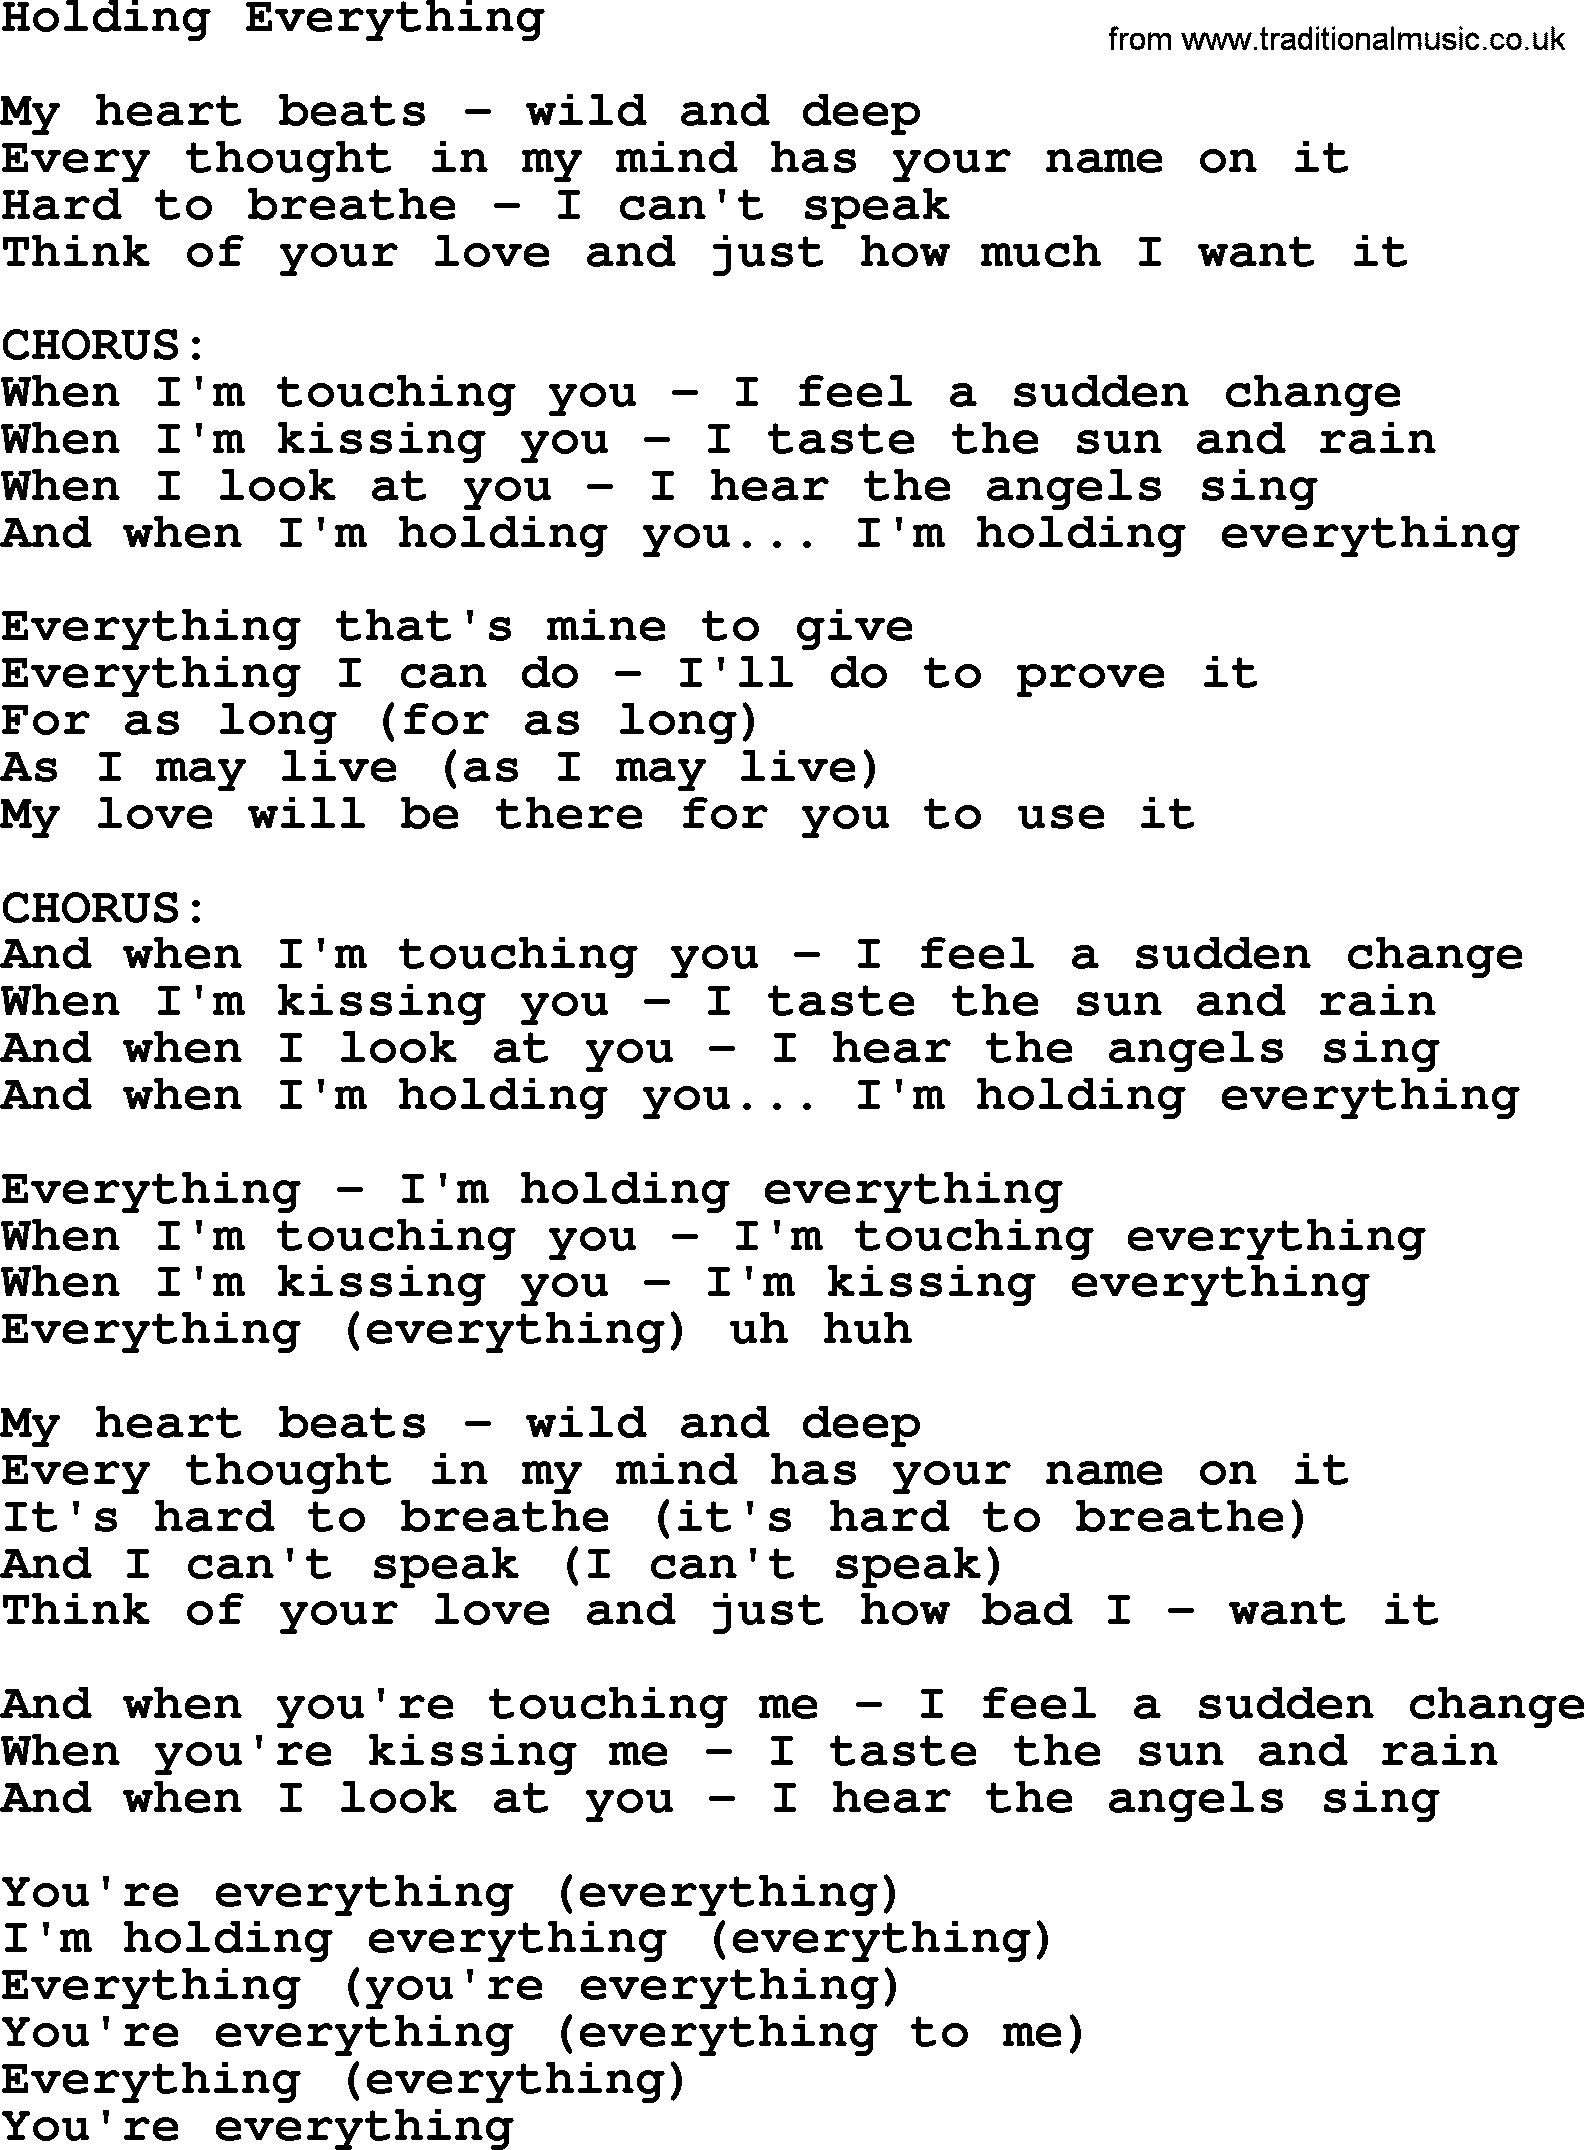 Dolly Parton song Holding Everything.txt lyrics